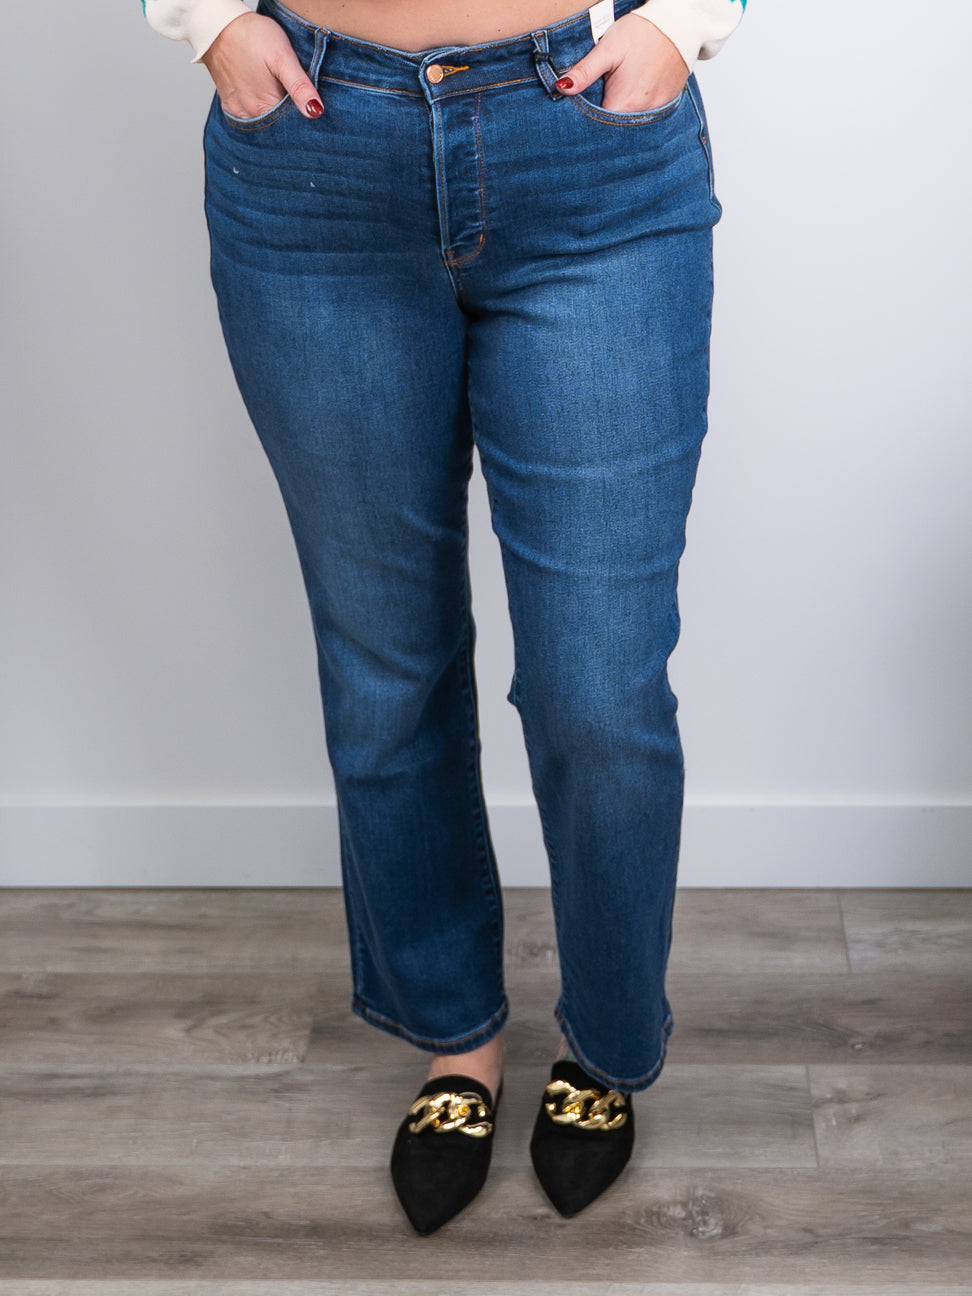 Judy Blue Dark Wash Skinny Fit Tummy Control Jean (sizes 24-24W) - FIN -  The Pink Porcupine ltd.